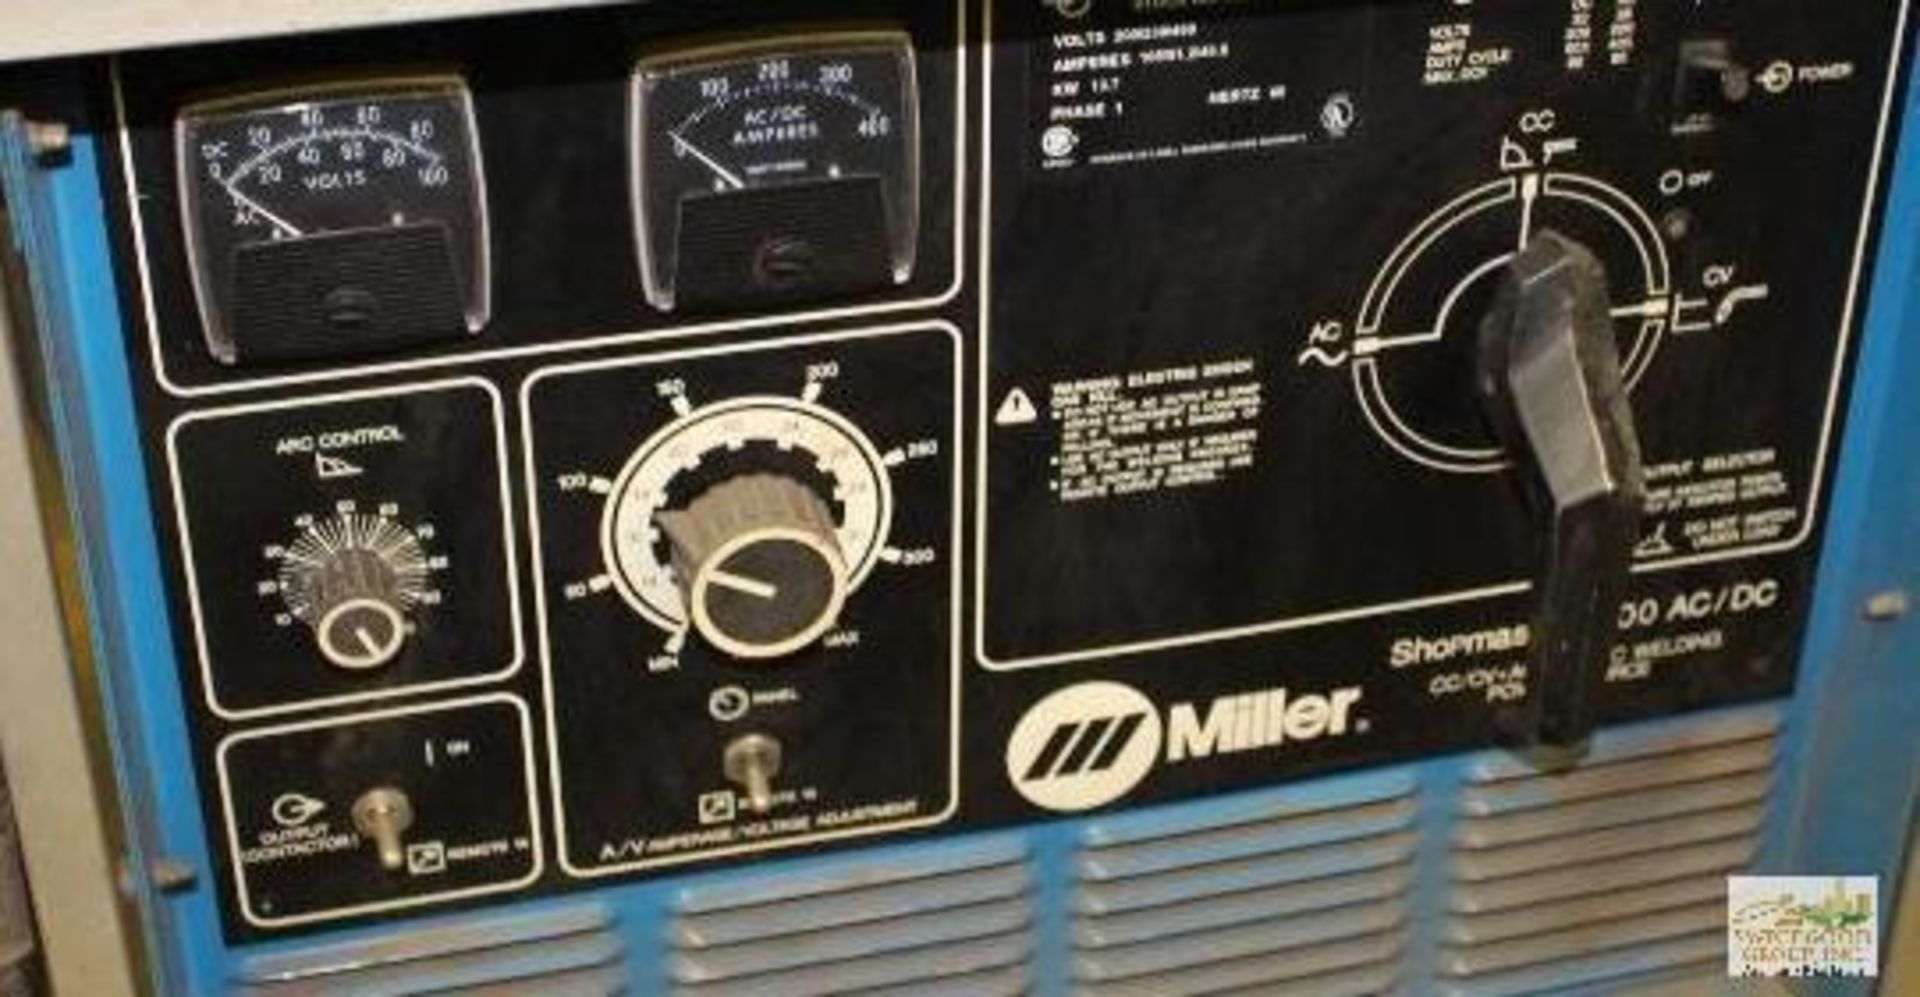 Miller Shop Master 300AC/DC, CC/CV-AC-DC Arc Welding Power Source - Image 4 of 5